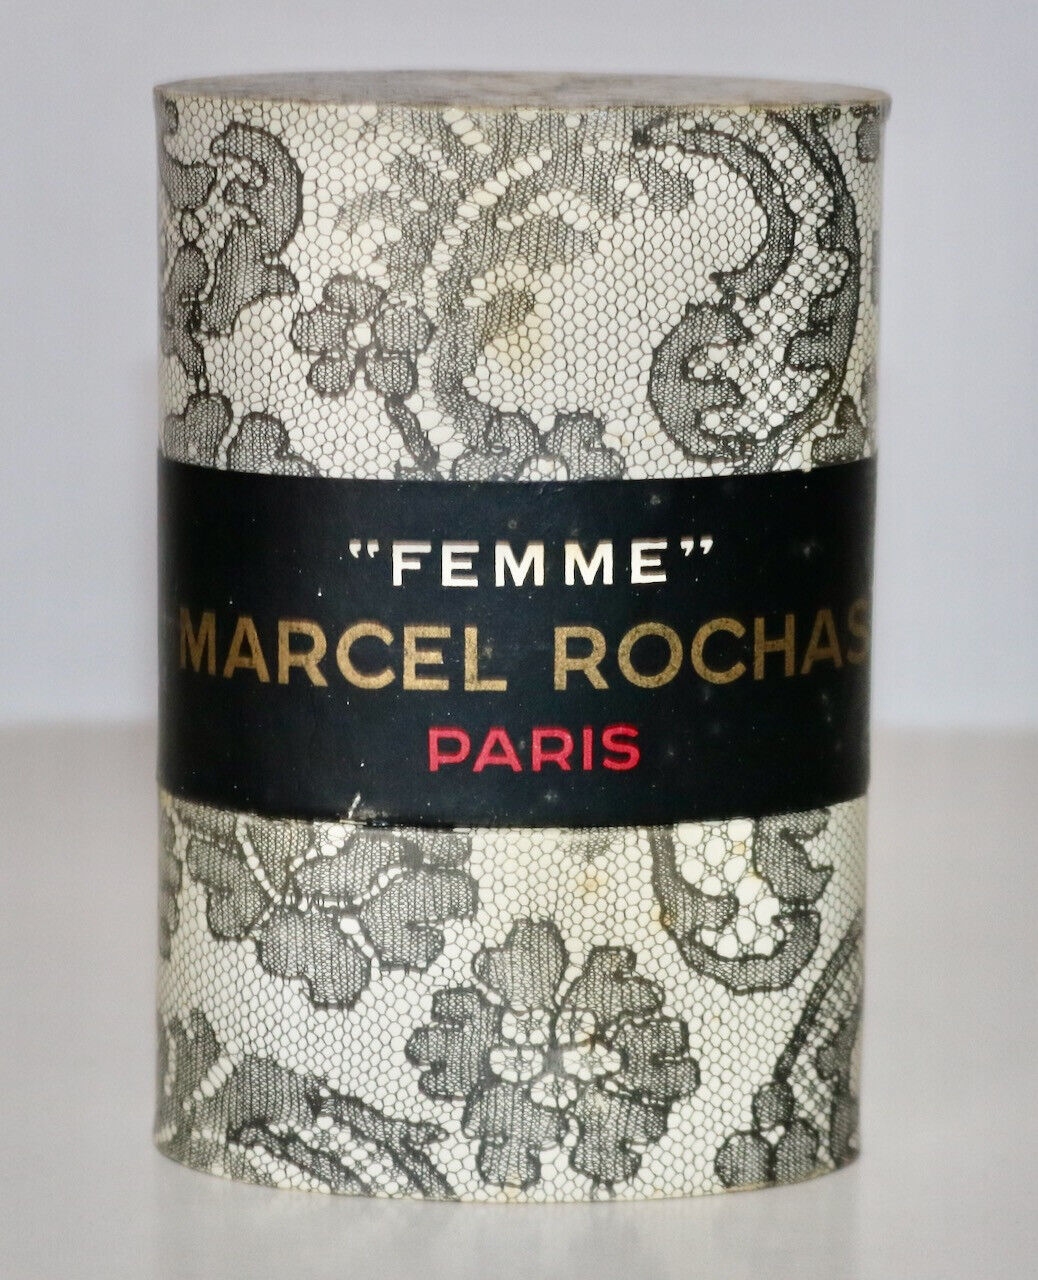 MARCEL ROCHAS FEMME parfum vintage